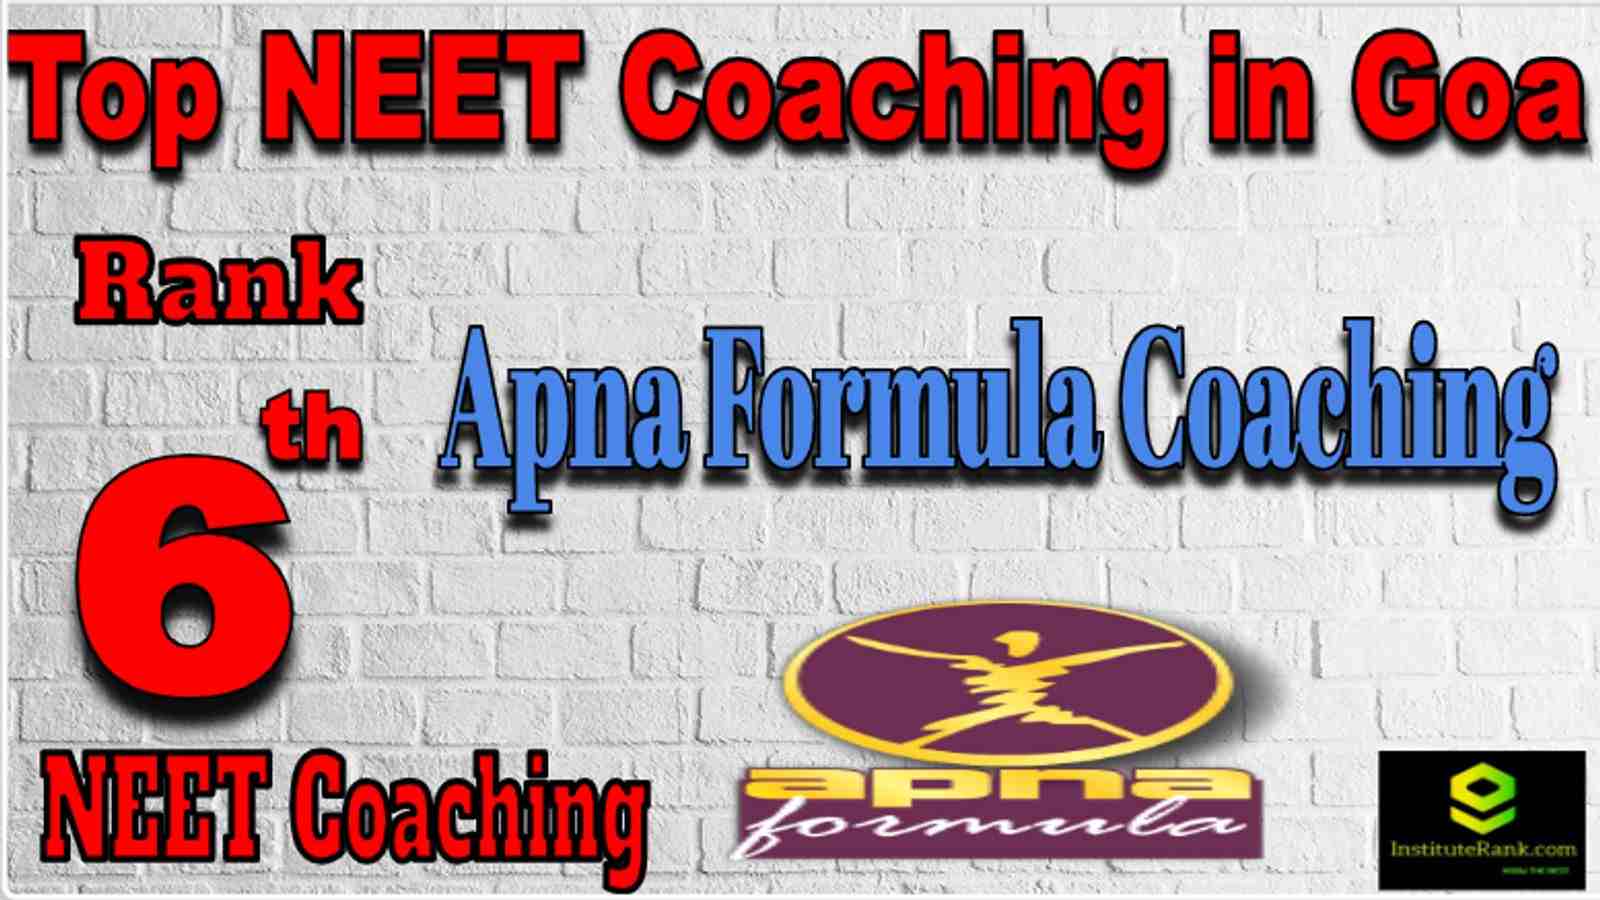 Rank 6 Top NEET Coaching in Goa